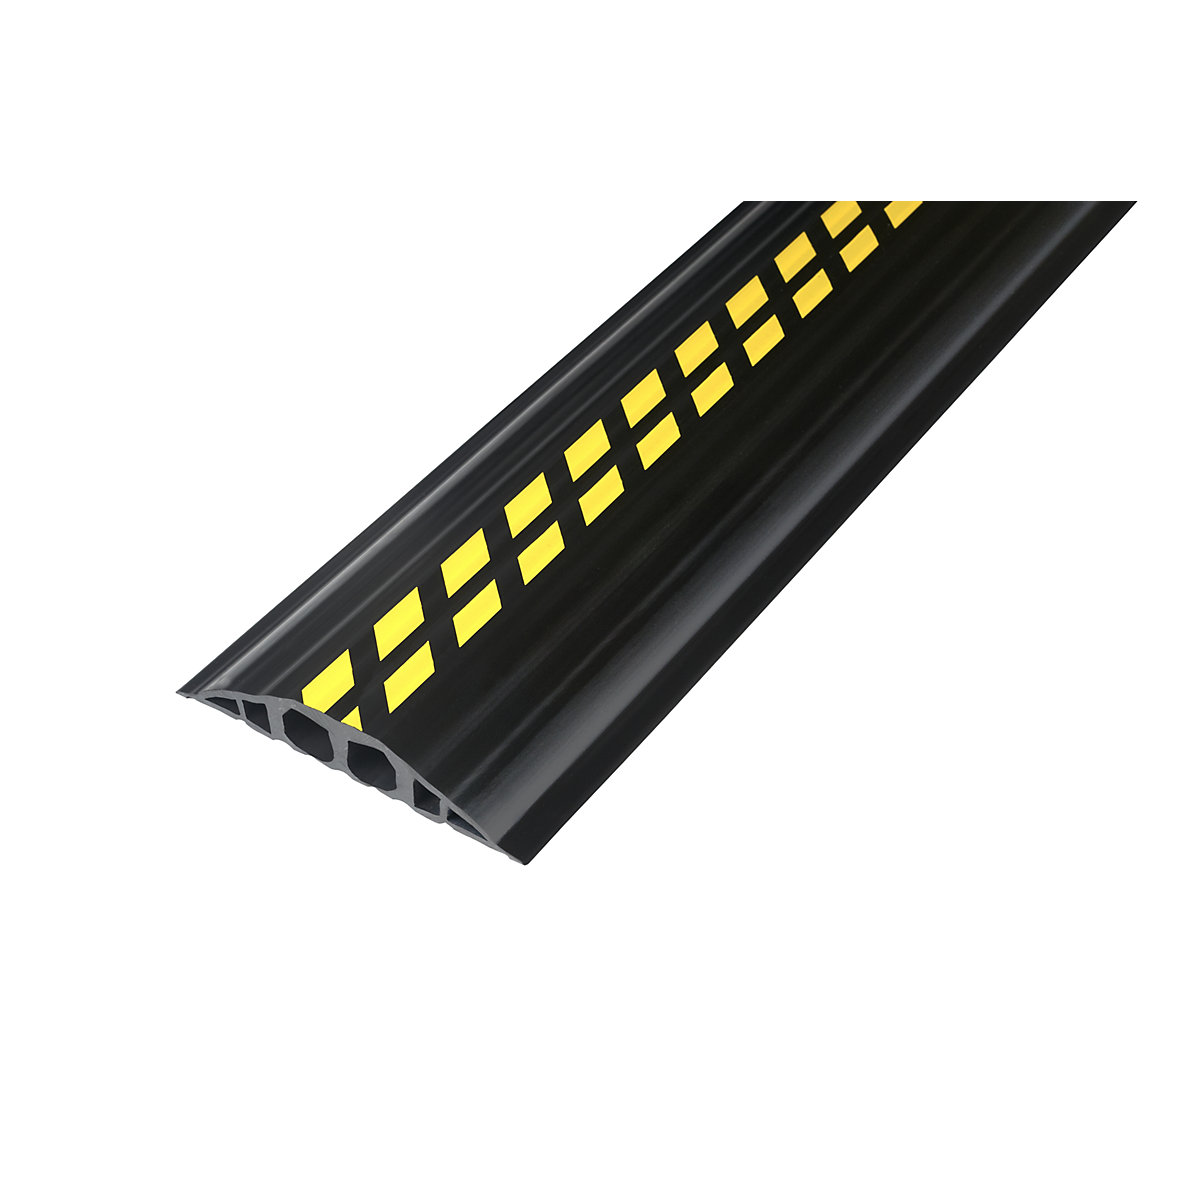 Kabelski most od PVC-a, DxŠxV 1500 x 200 x 35 mm, u crnoj / žutoj boji-4